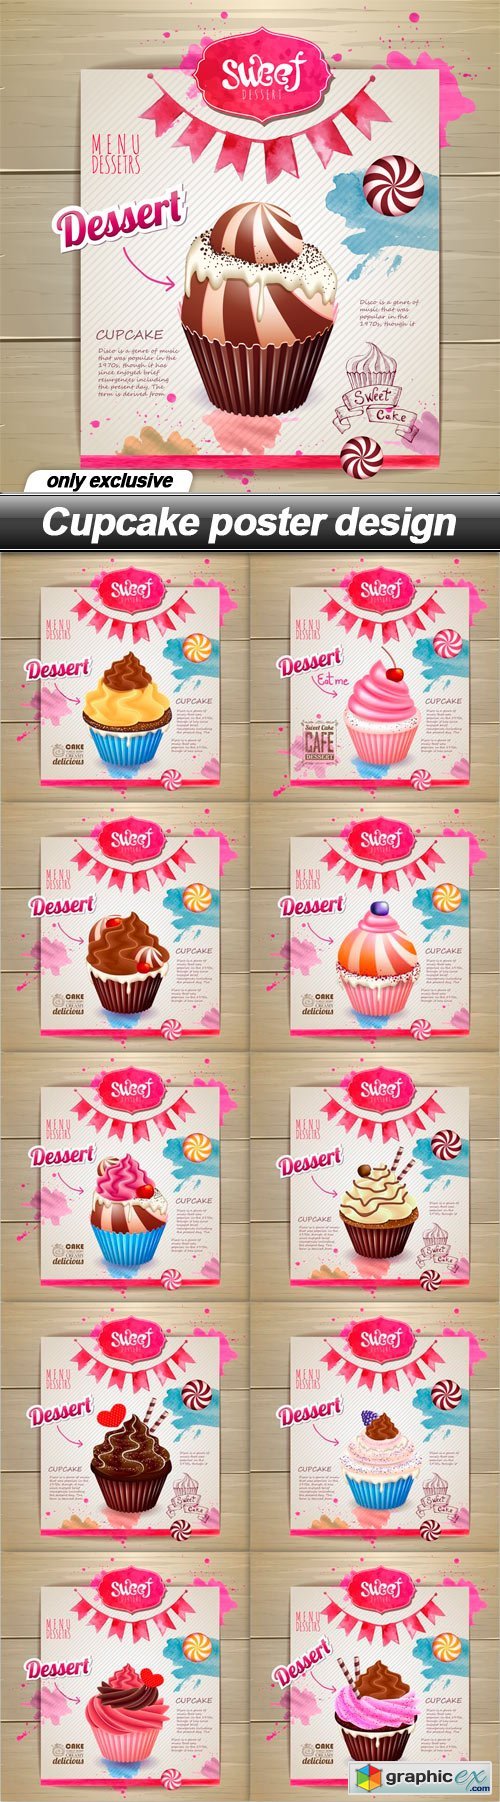 Cupcake poster design - 11 EPS